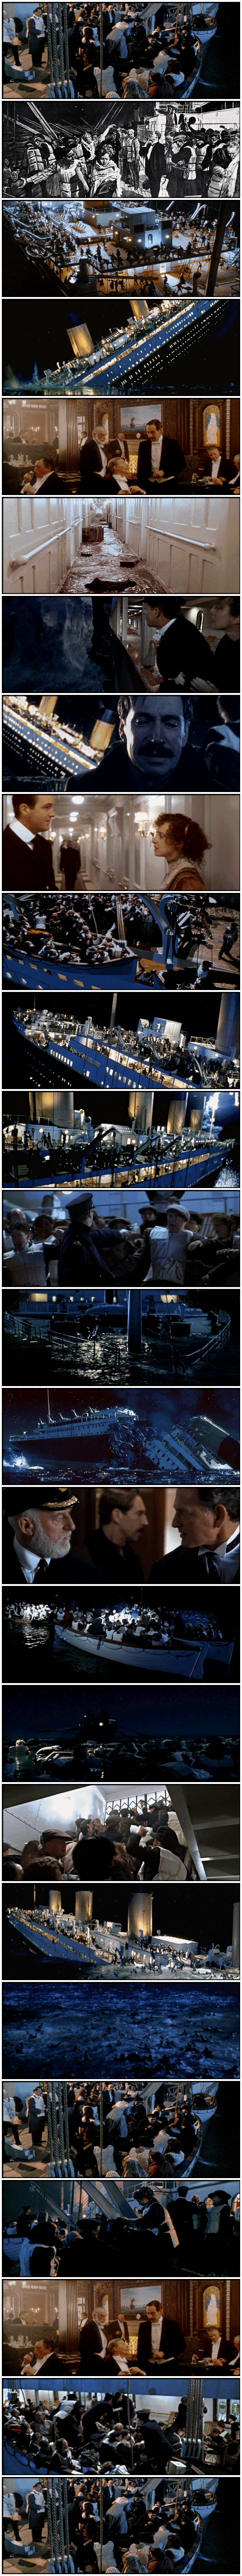 James Cameron's Titanic Explorer - Quote Images (CD2)